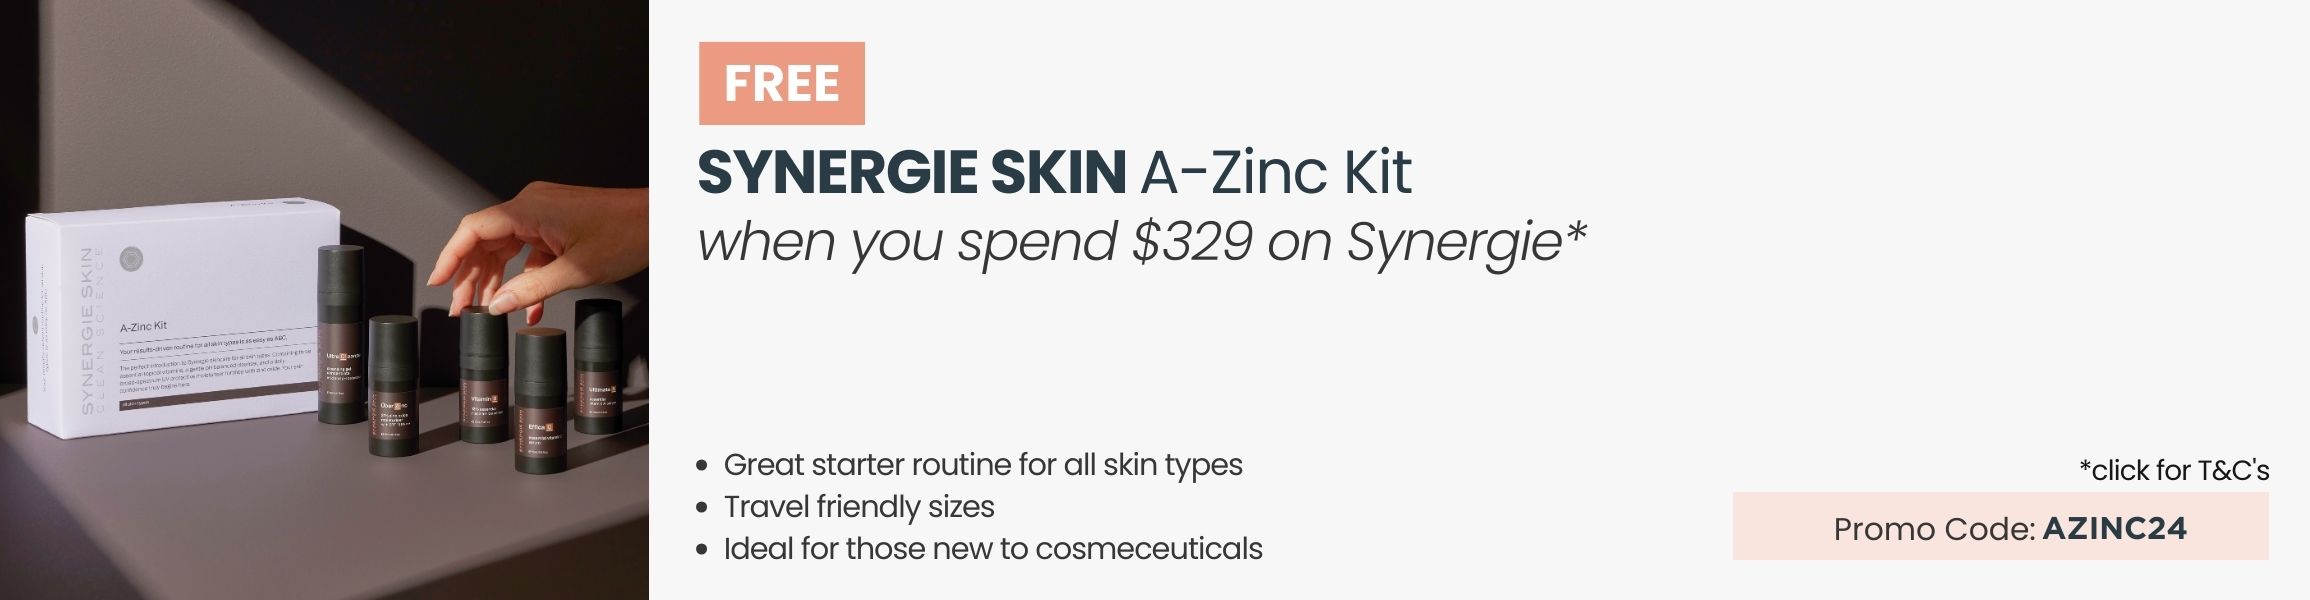 FREE Synergie Skin A-Zinc Kit30ml worth $150. Min spend $329 on Synergie. Promo Code: AZINC24.